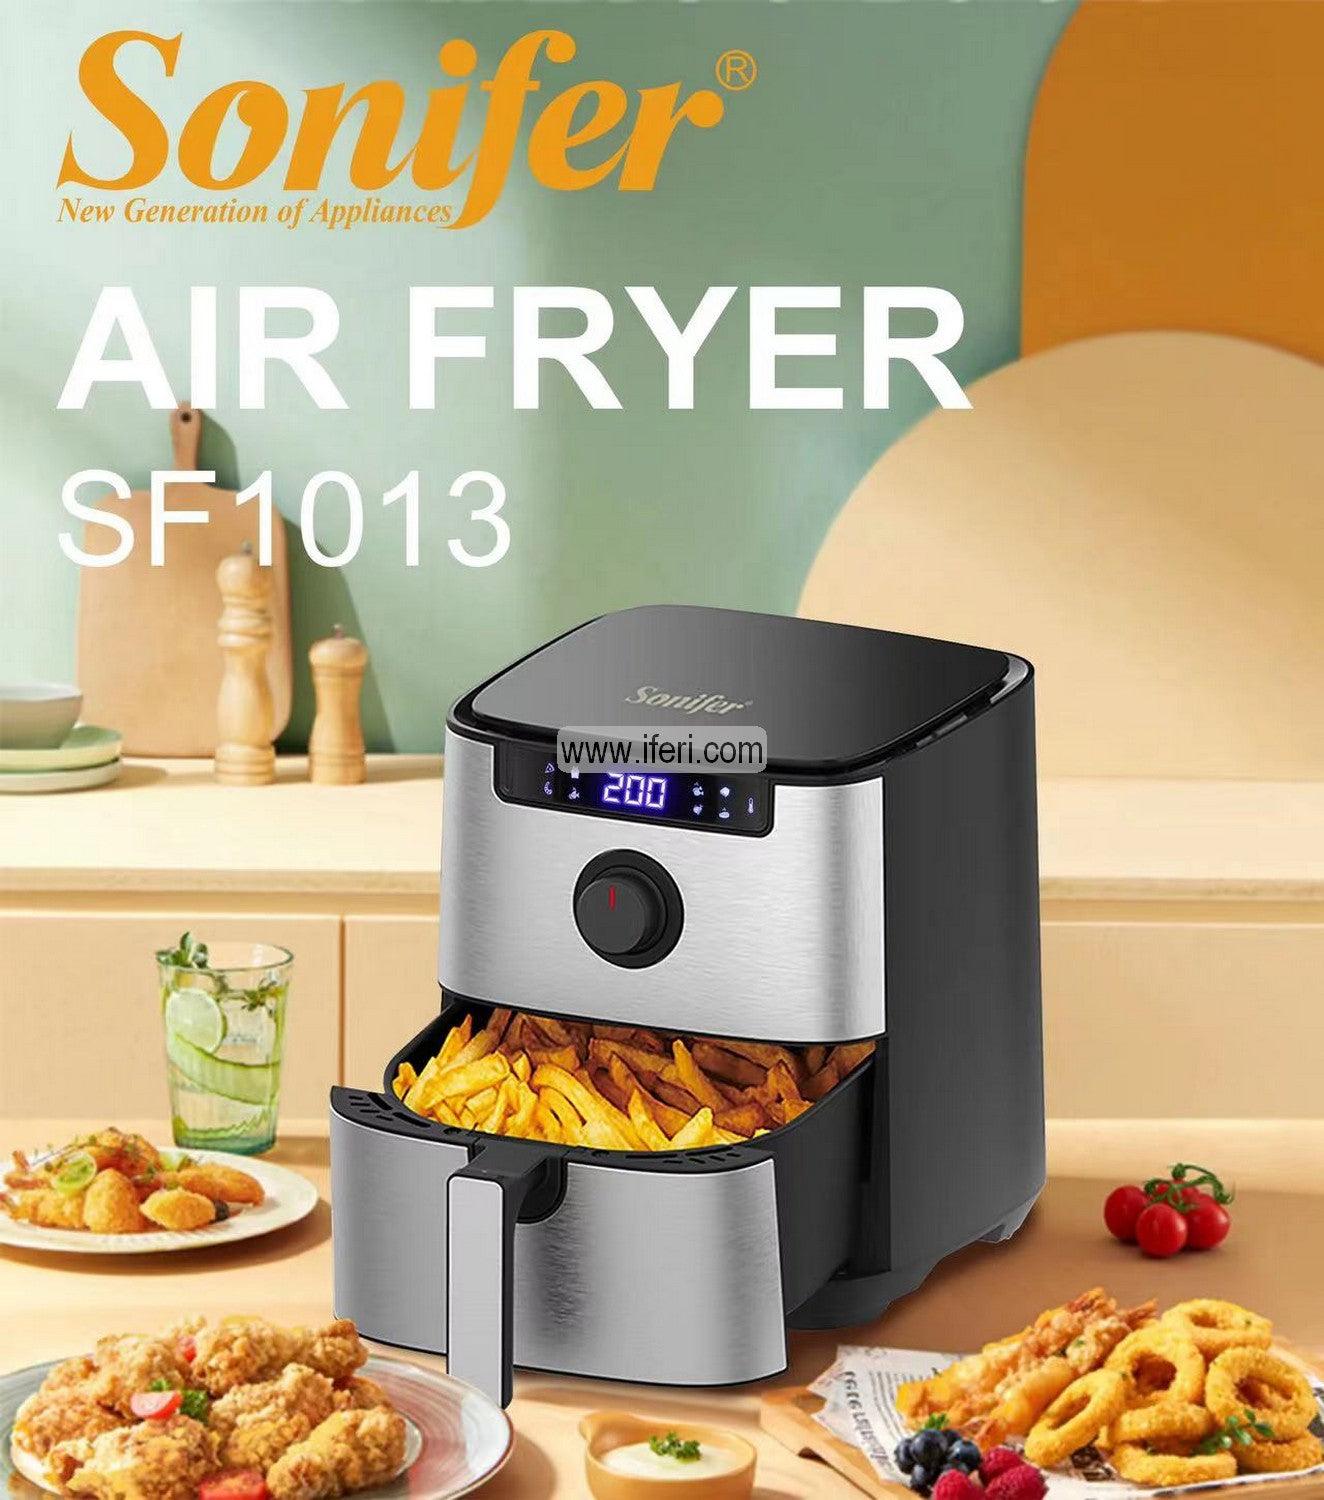 Sonifer 1450W Air Fryer SF-1013 Price in Bangladesh - iferi.com